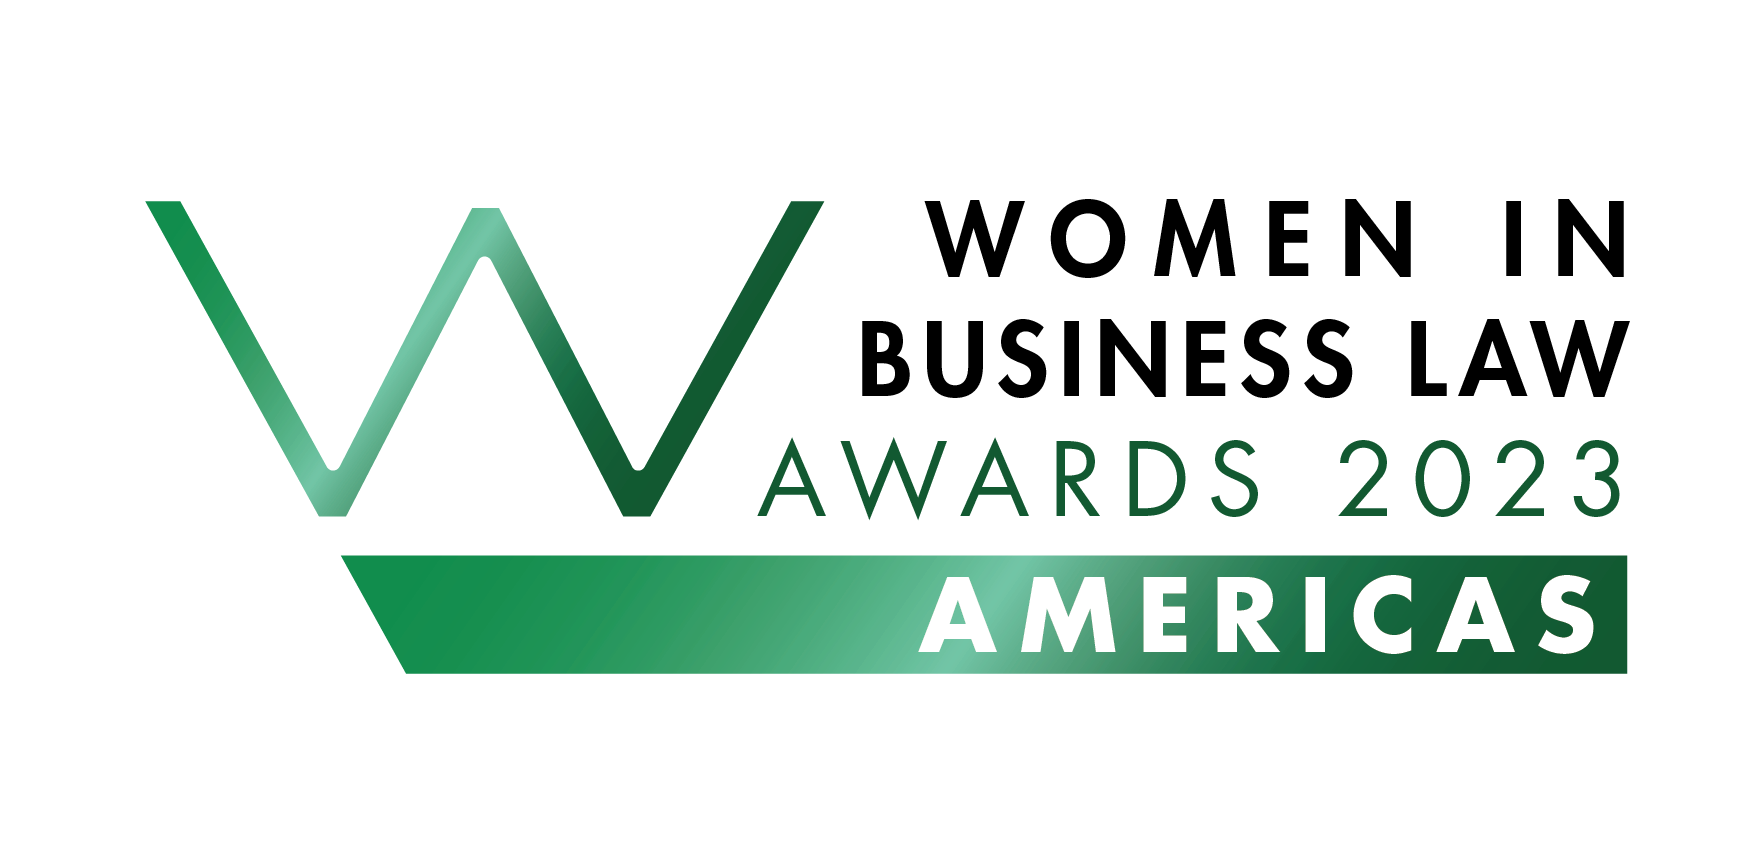 Women in Business Law Awards - Americas